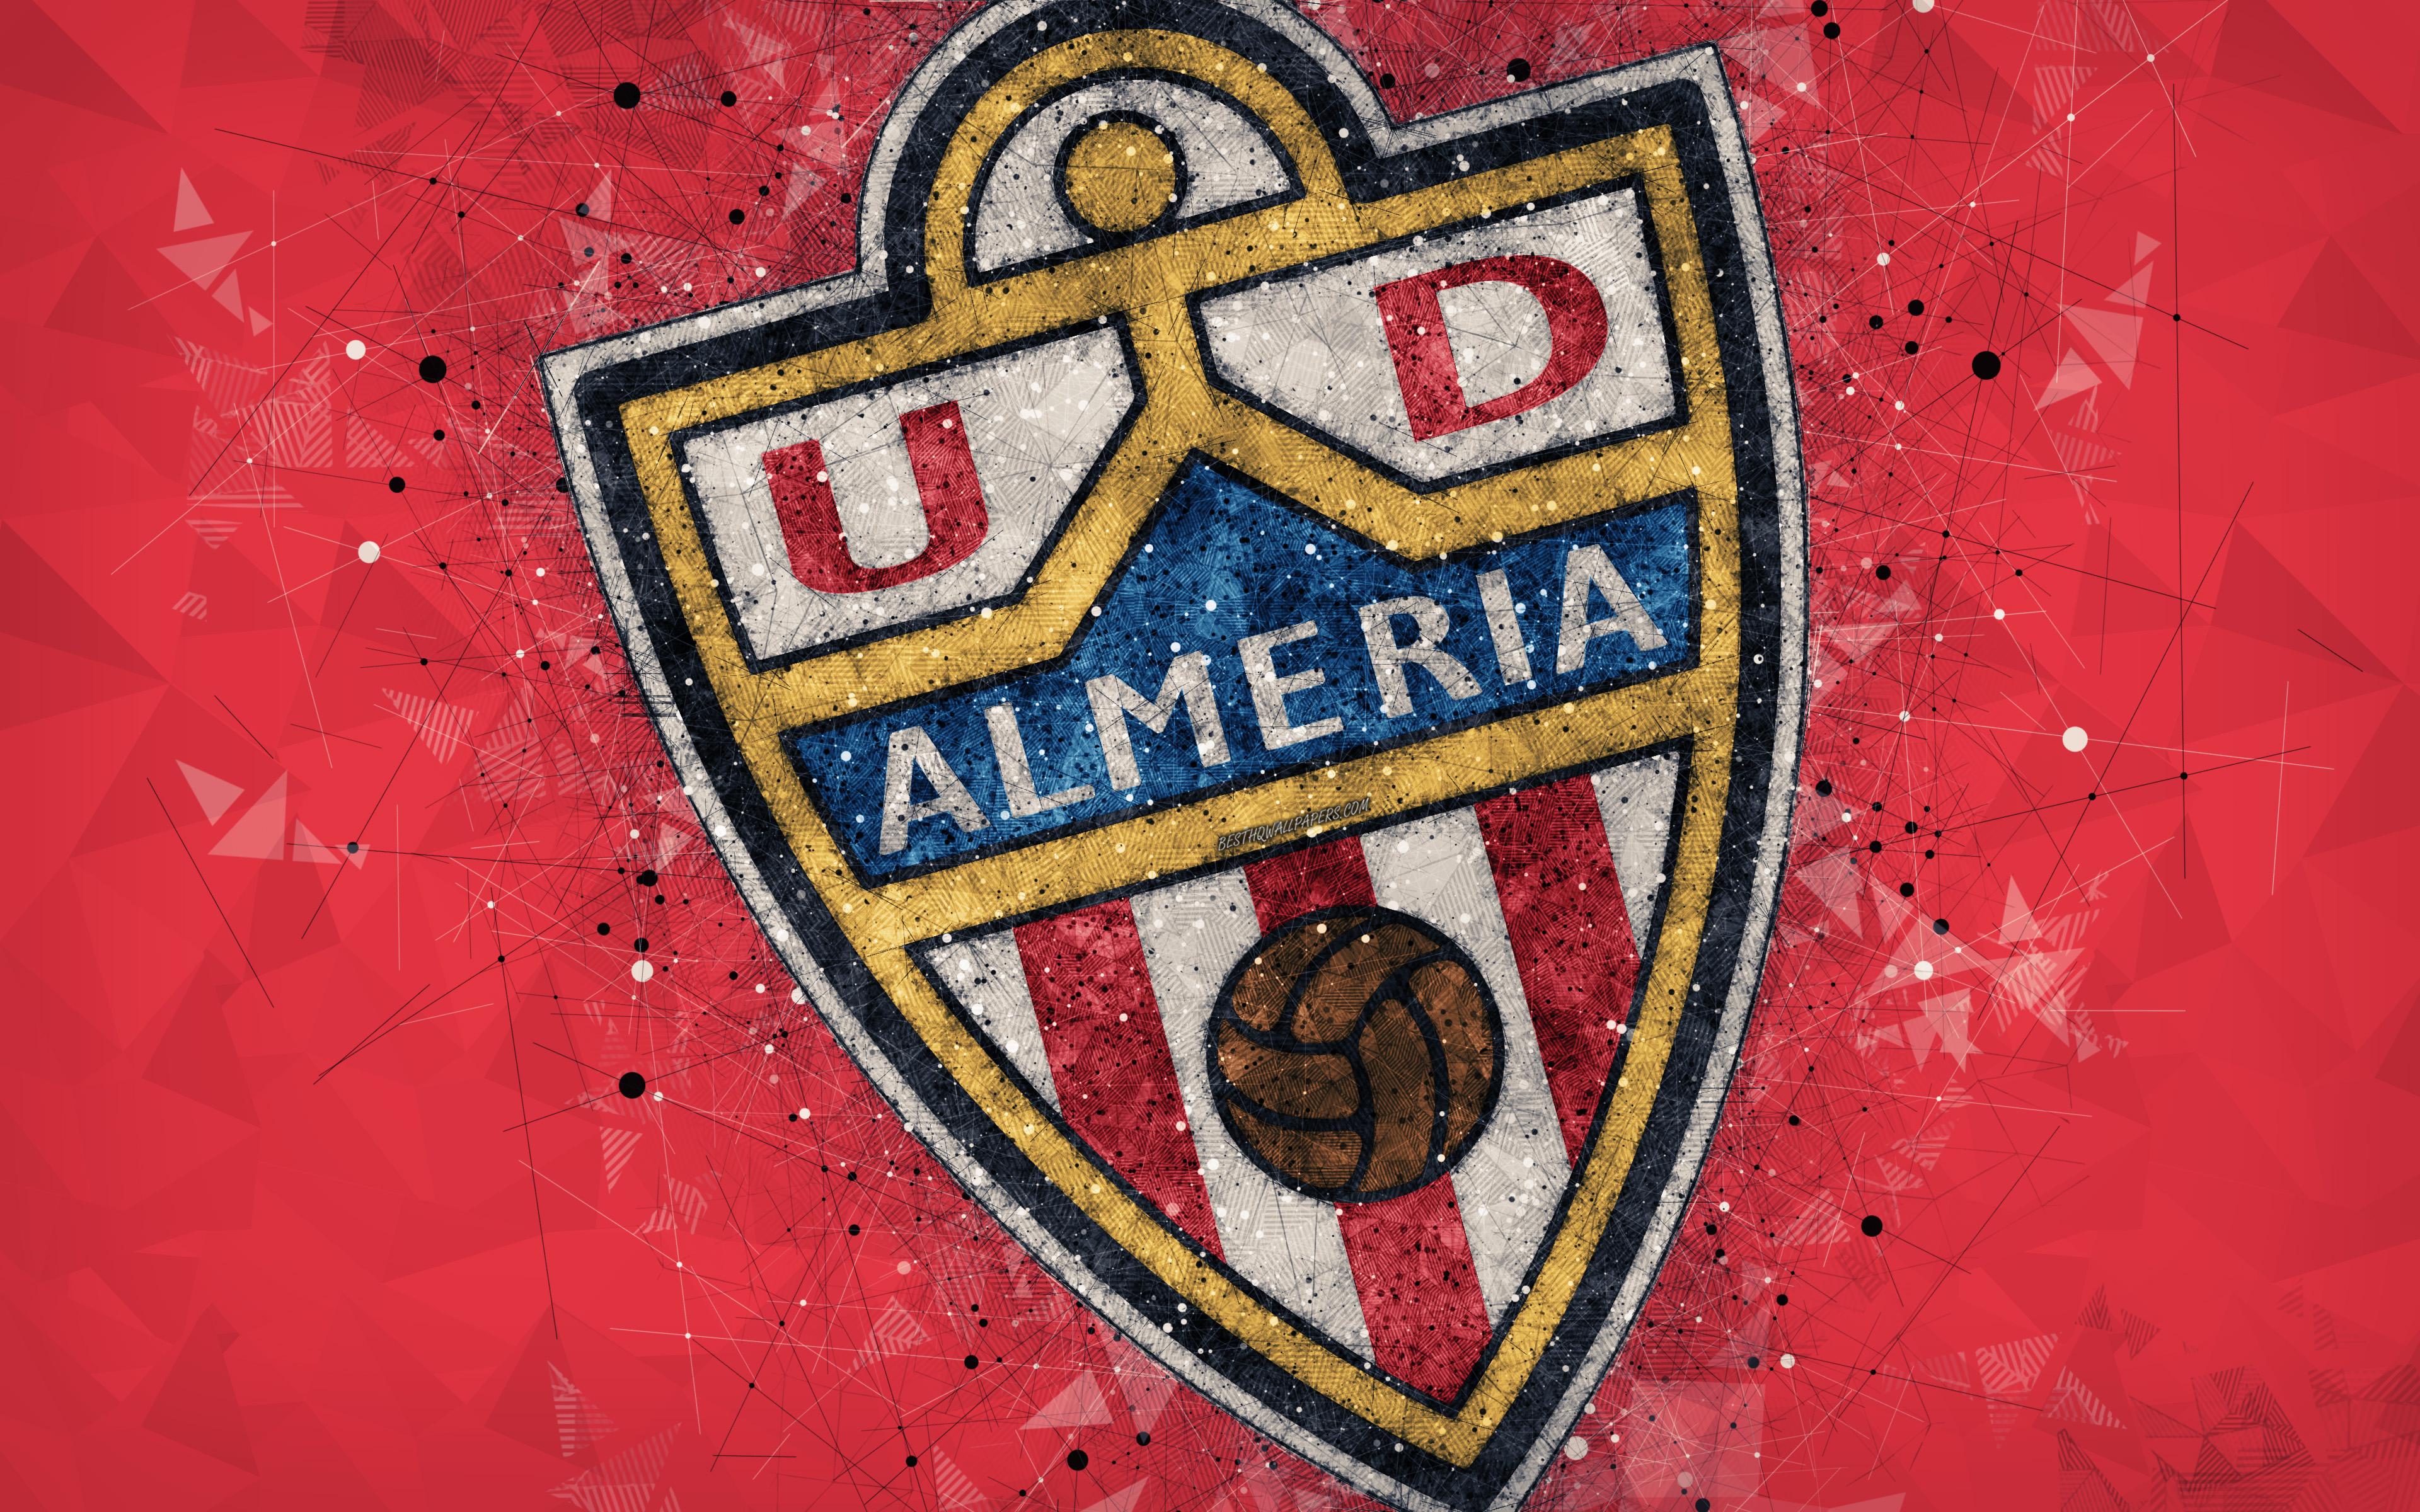 Download wallpaper UD Almeria, 4k, geometric art, logo, red